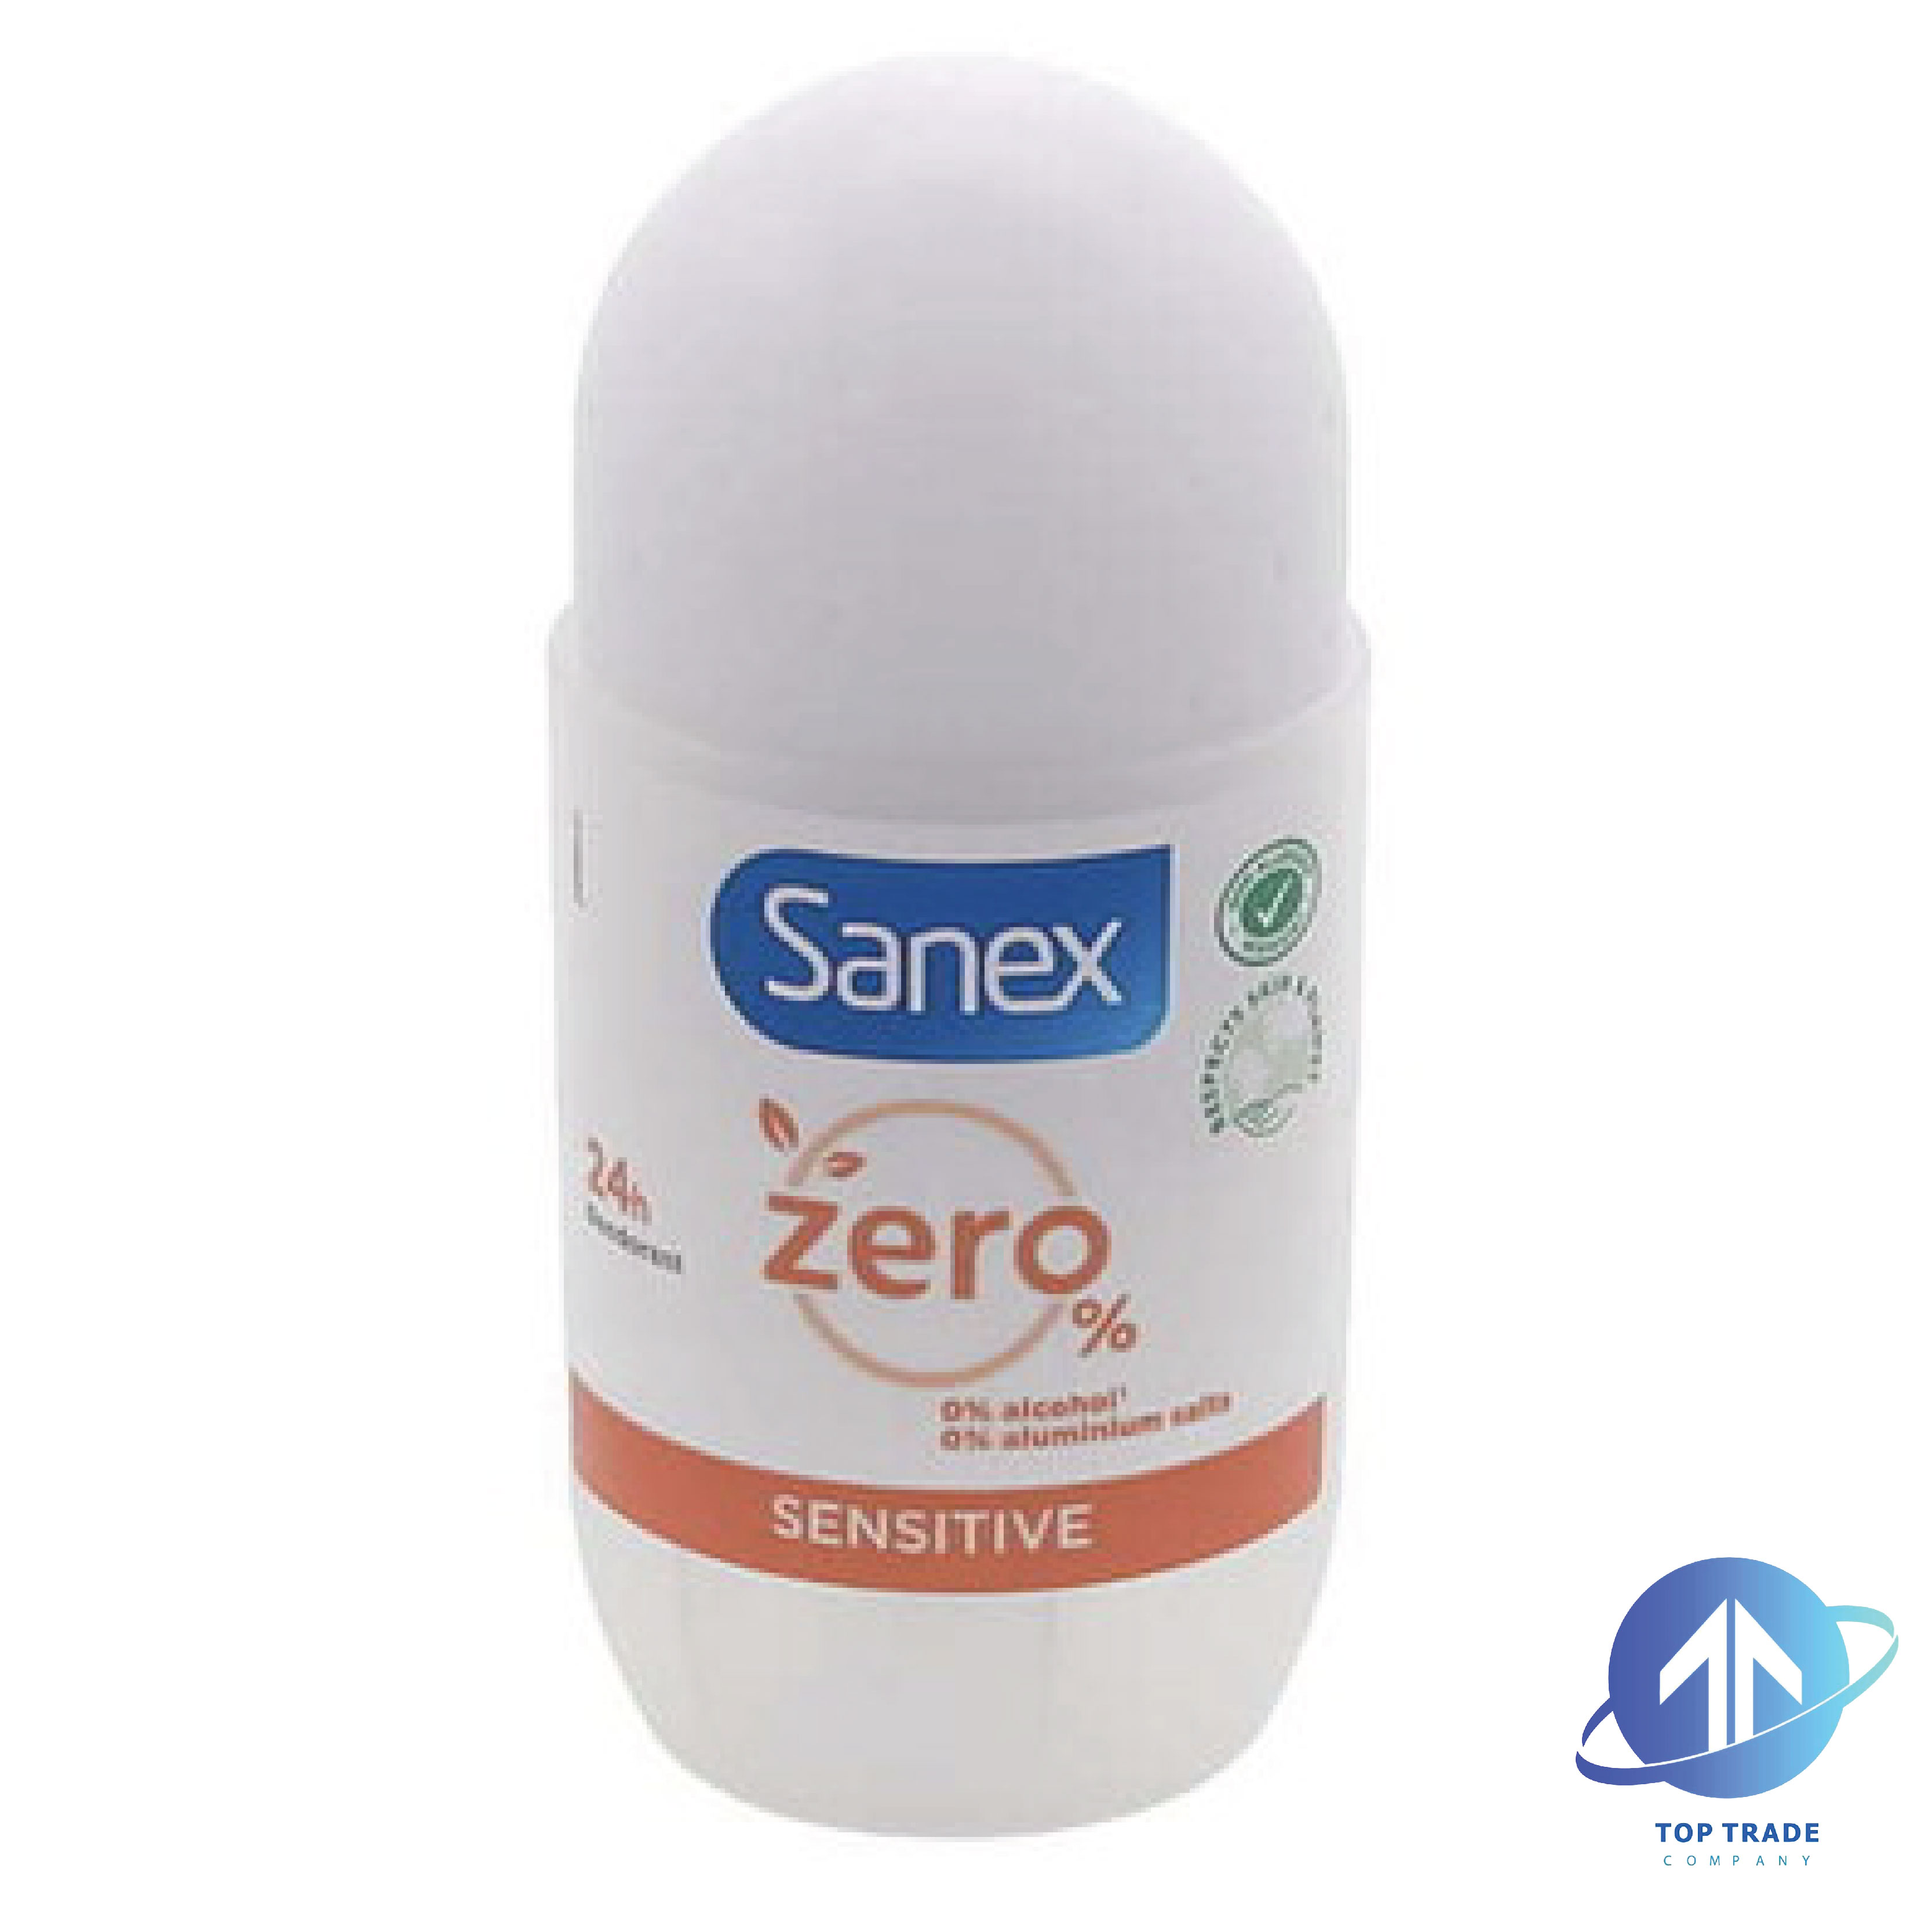 Sanex deo roll-on Zero % Sensitive Skin 50ml